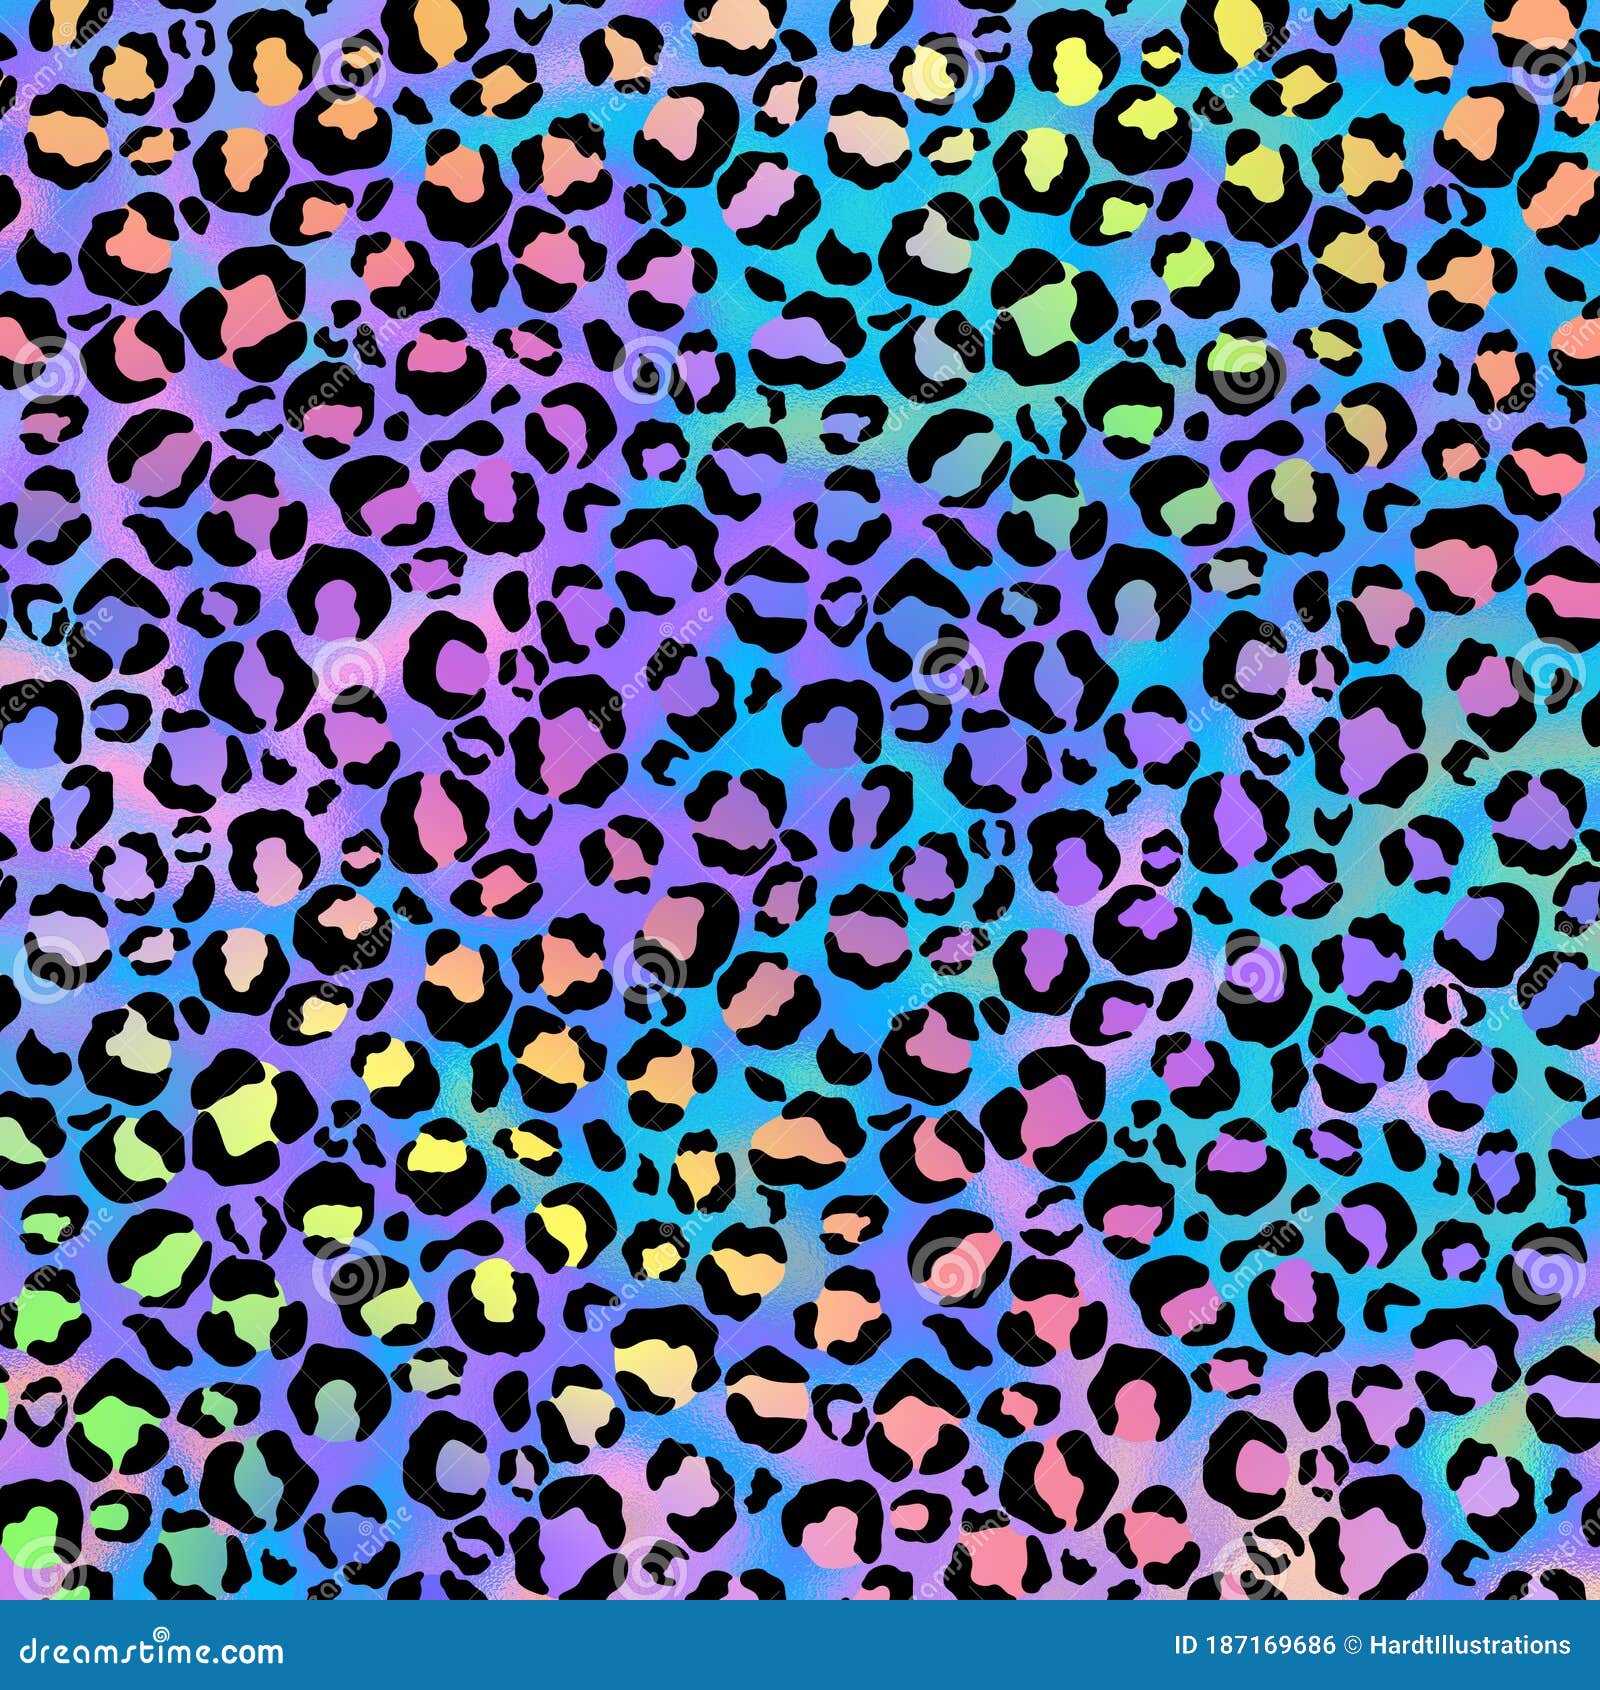 Holographic Leopard Print on Gradient Background Stock Illustration ...